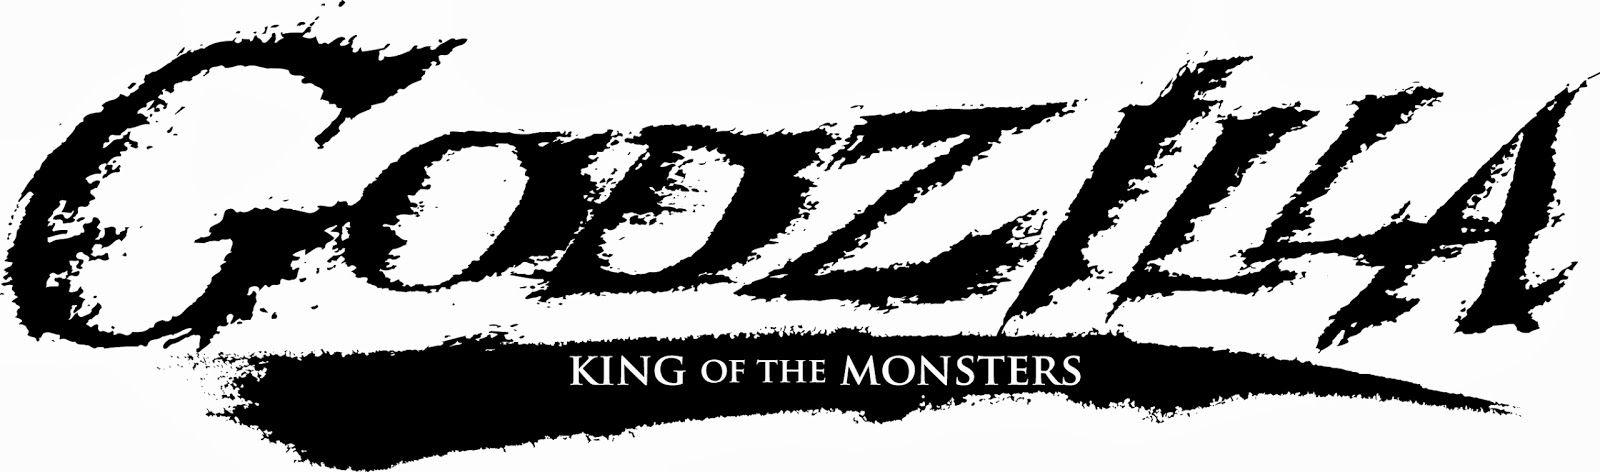 Godzilla Black and White Logo - The Vysther's Halloween Haunt Journal: ALL HAIL GODZILLA - On his ...